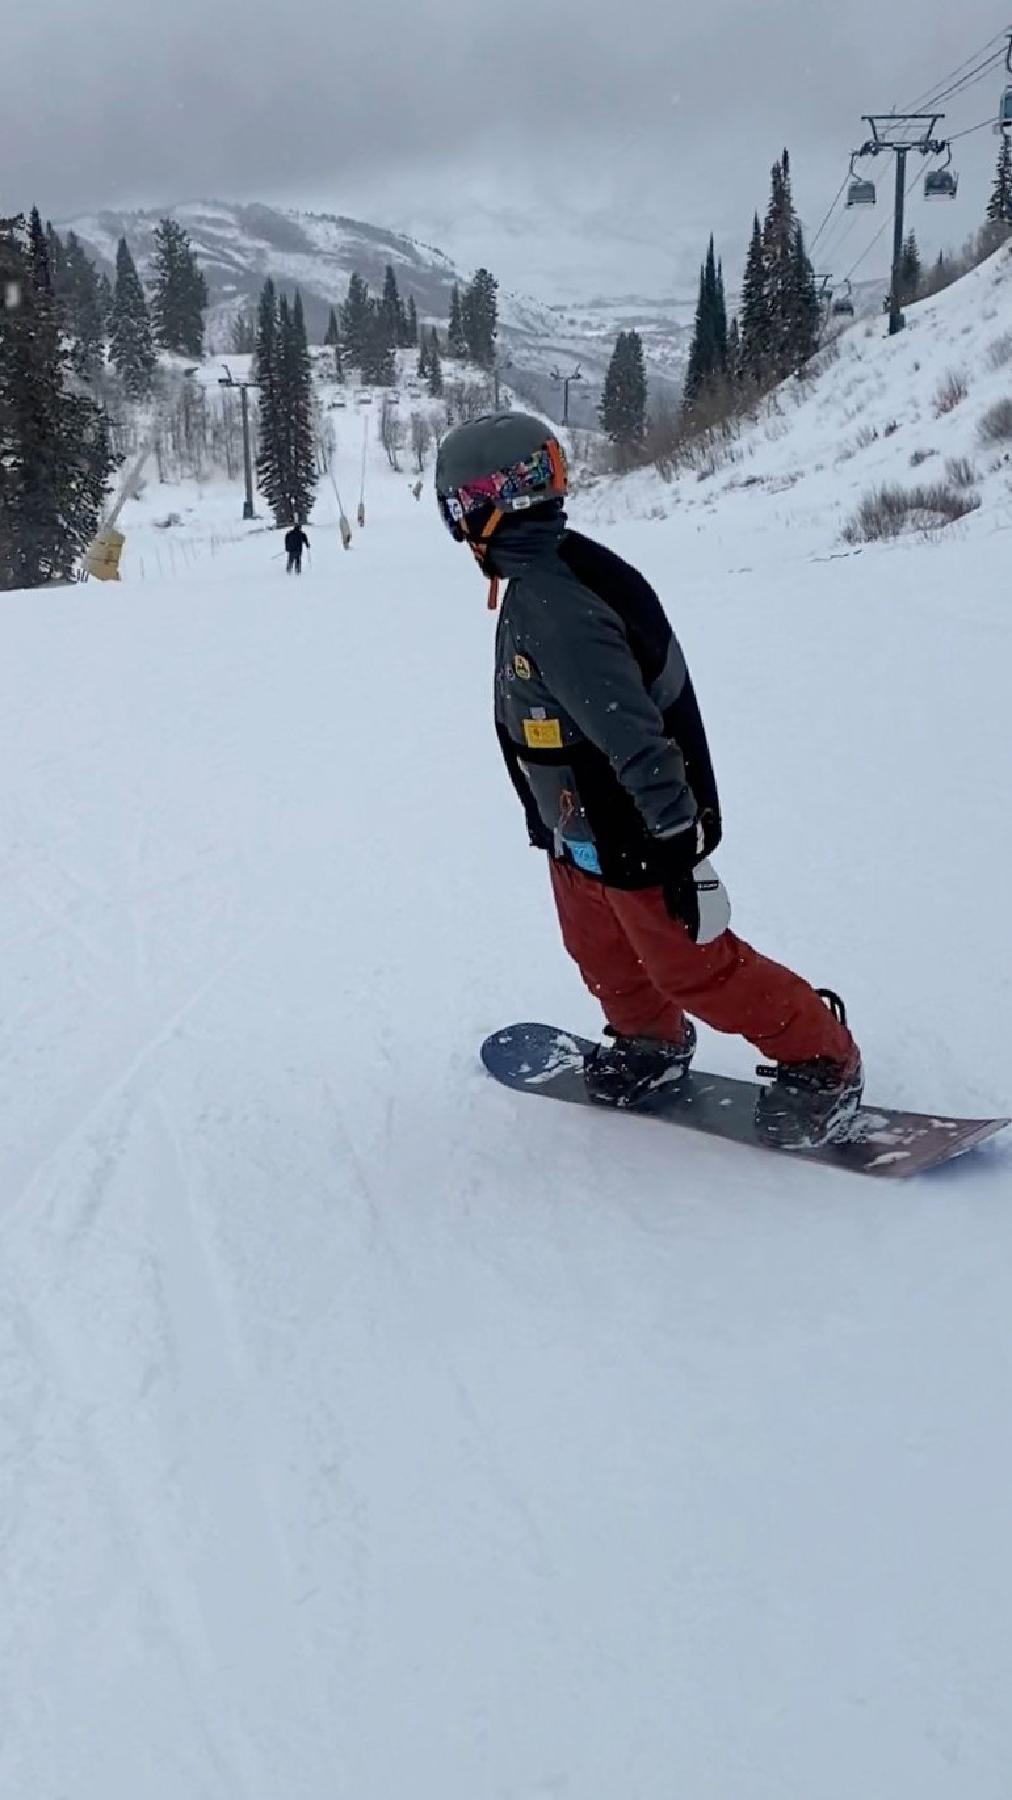 The author's son tries snowboarding at the Snowbasin Resort in Ogden, Utah. (Margot Black)